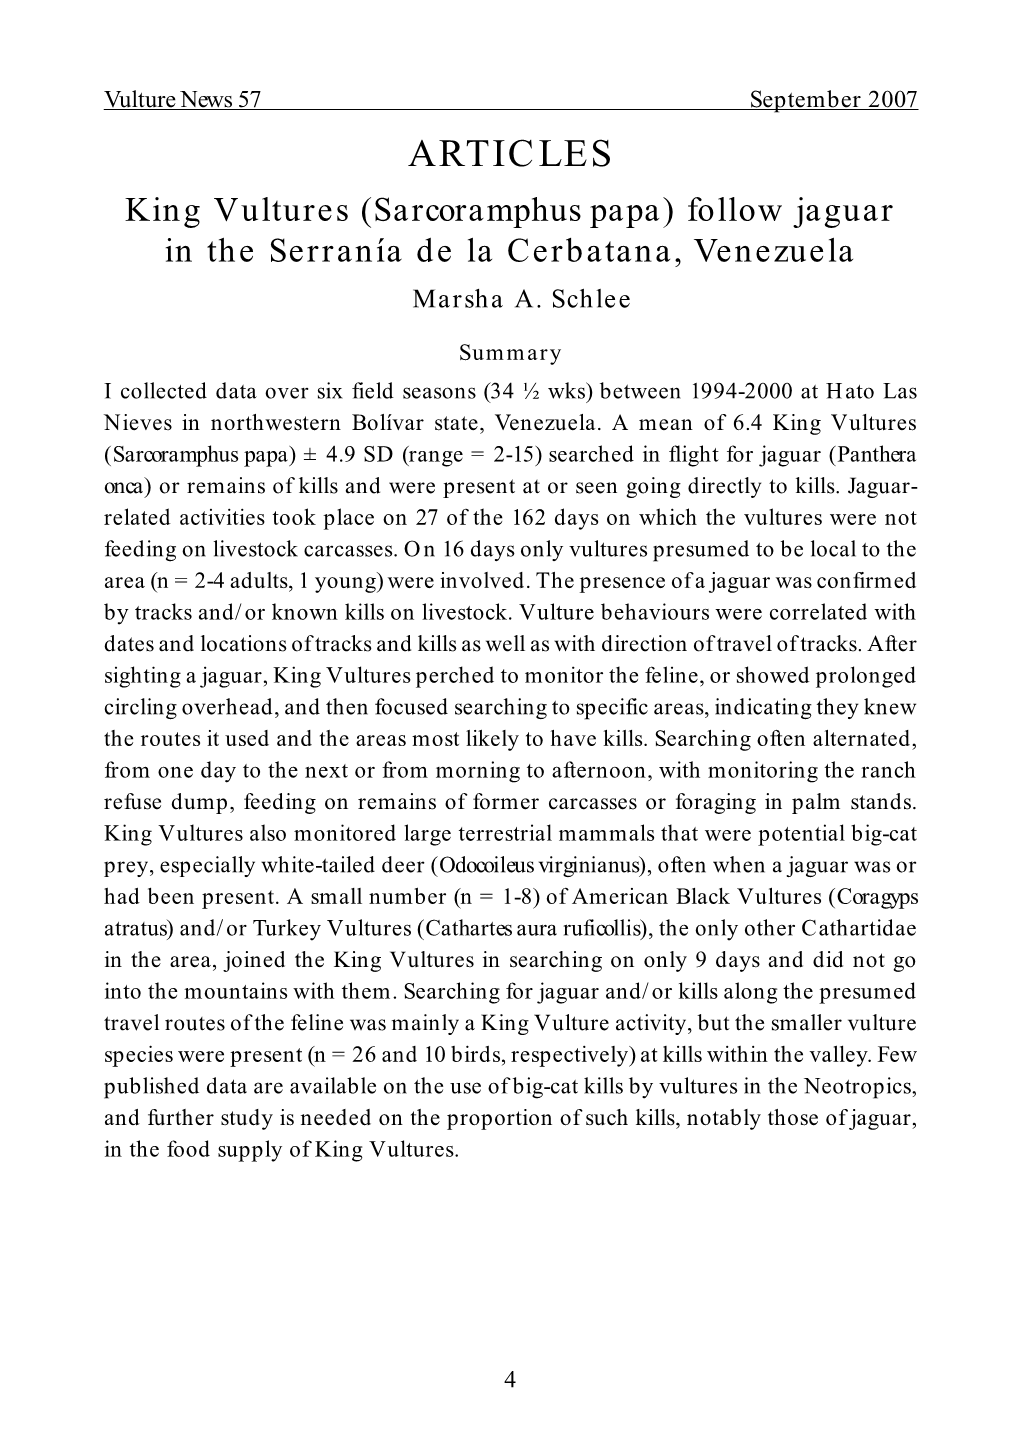 Articles King Vultures (Sarcoramphus Papa) Follow Jaguar in the Serranía De La Cerbatana, Venezuela Marsha A